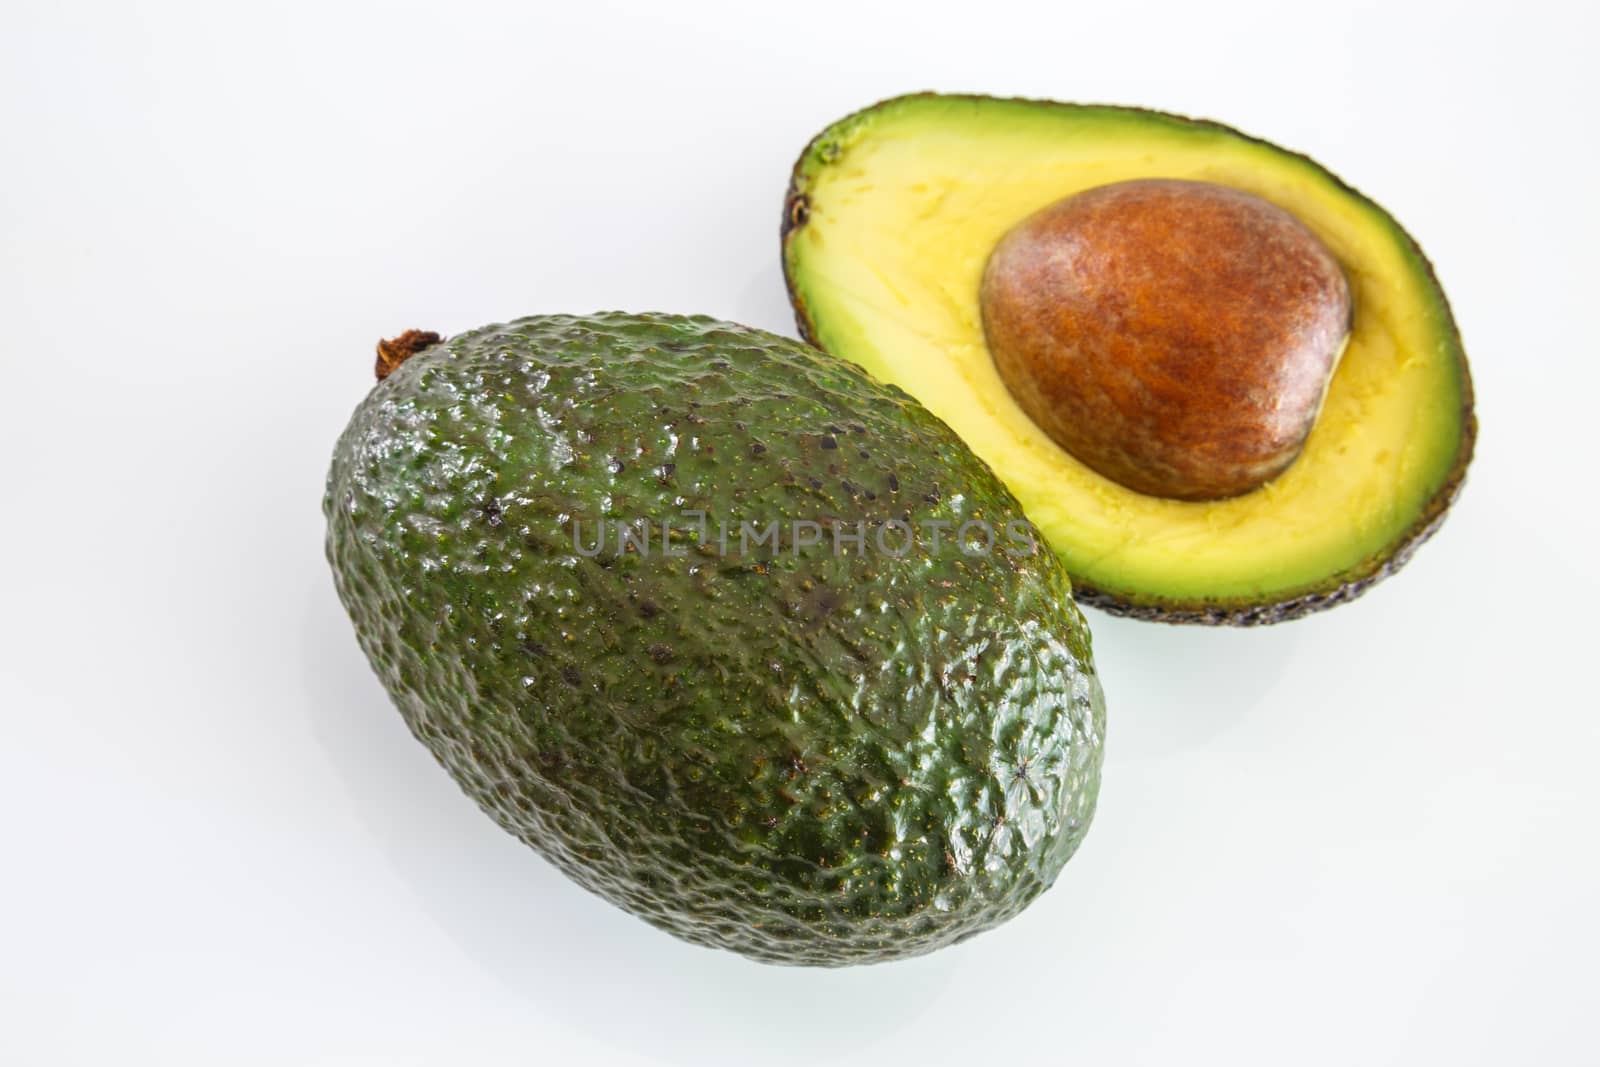 Fresh avocado on white background. Selective focus by pixinoo